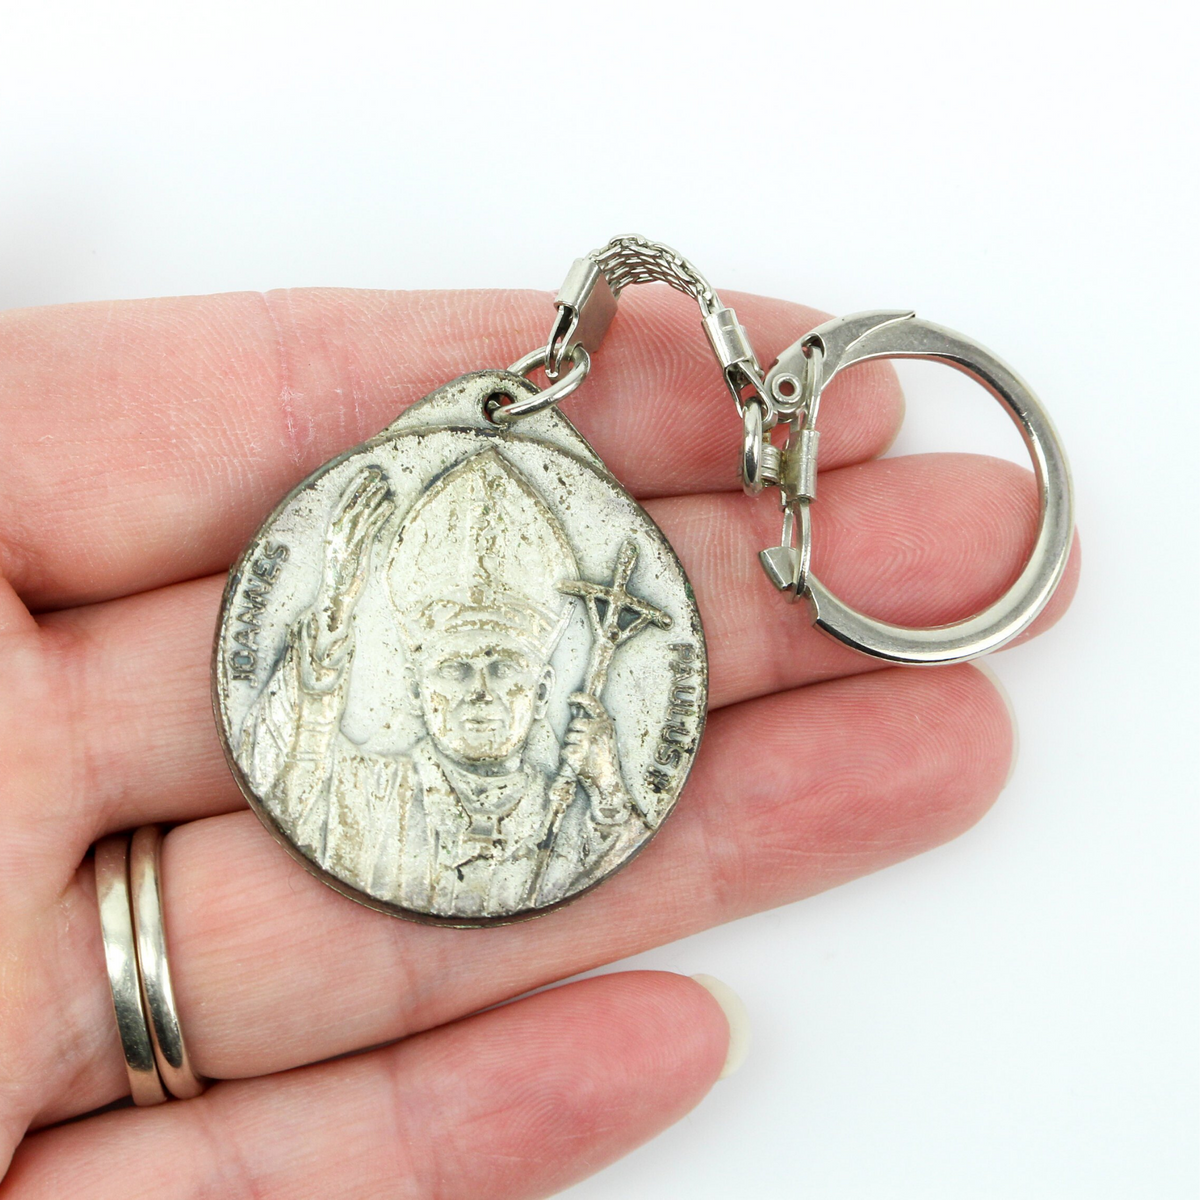 Key Ring Holder - Keychain Medallion - Catholic Gift - Blessed by Pope